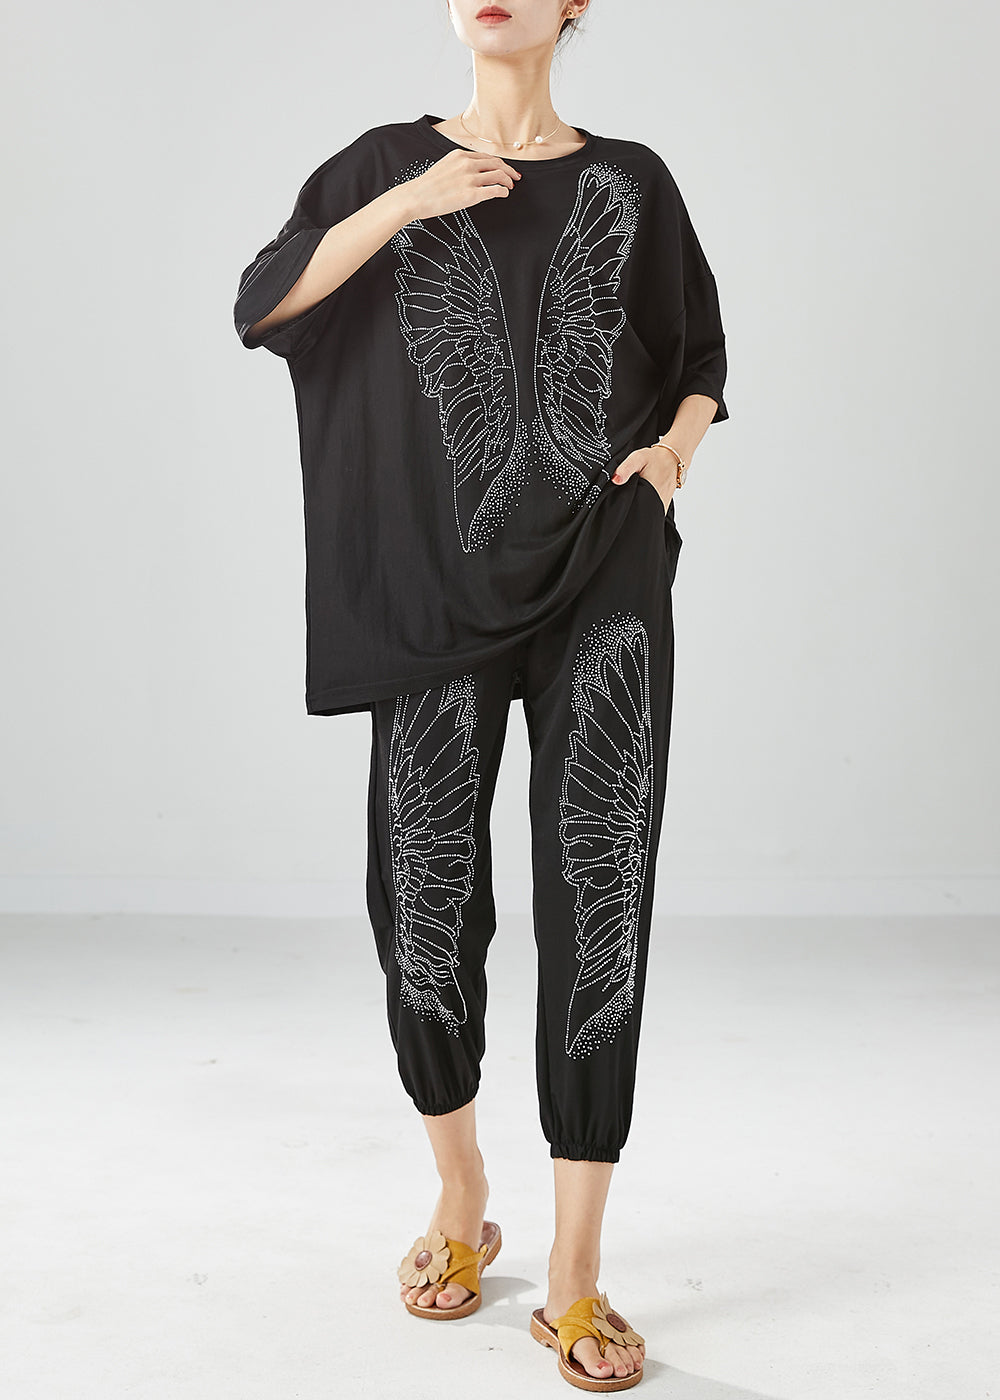 Italian Black Oversized Print Cotton Two Piece Set Women Clothing Summer LY6137 - fabuloryshop